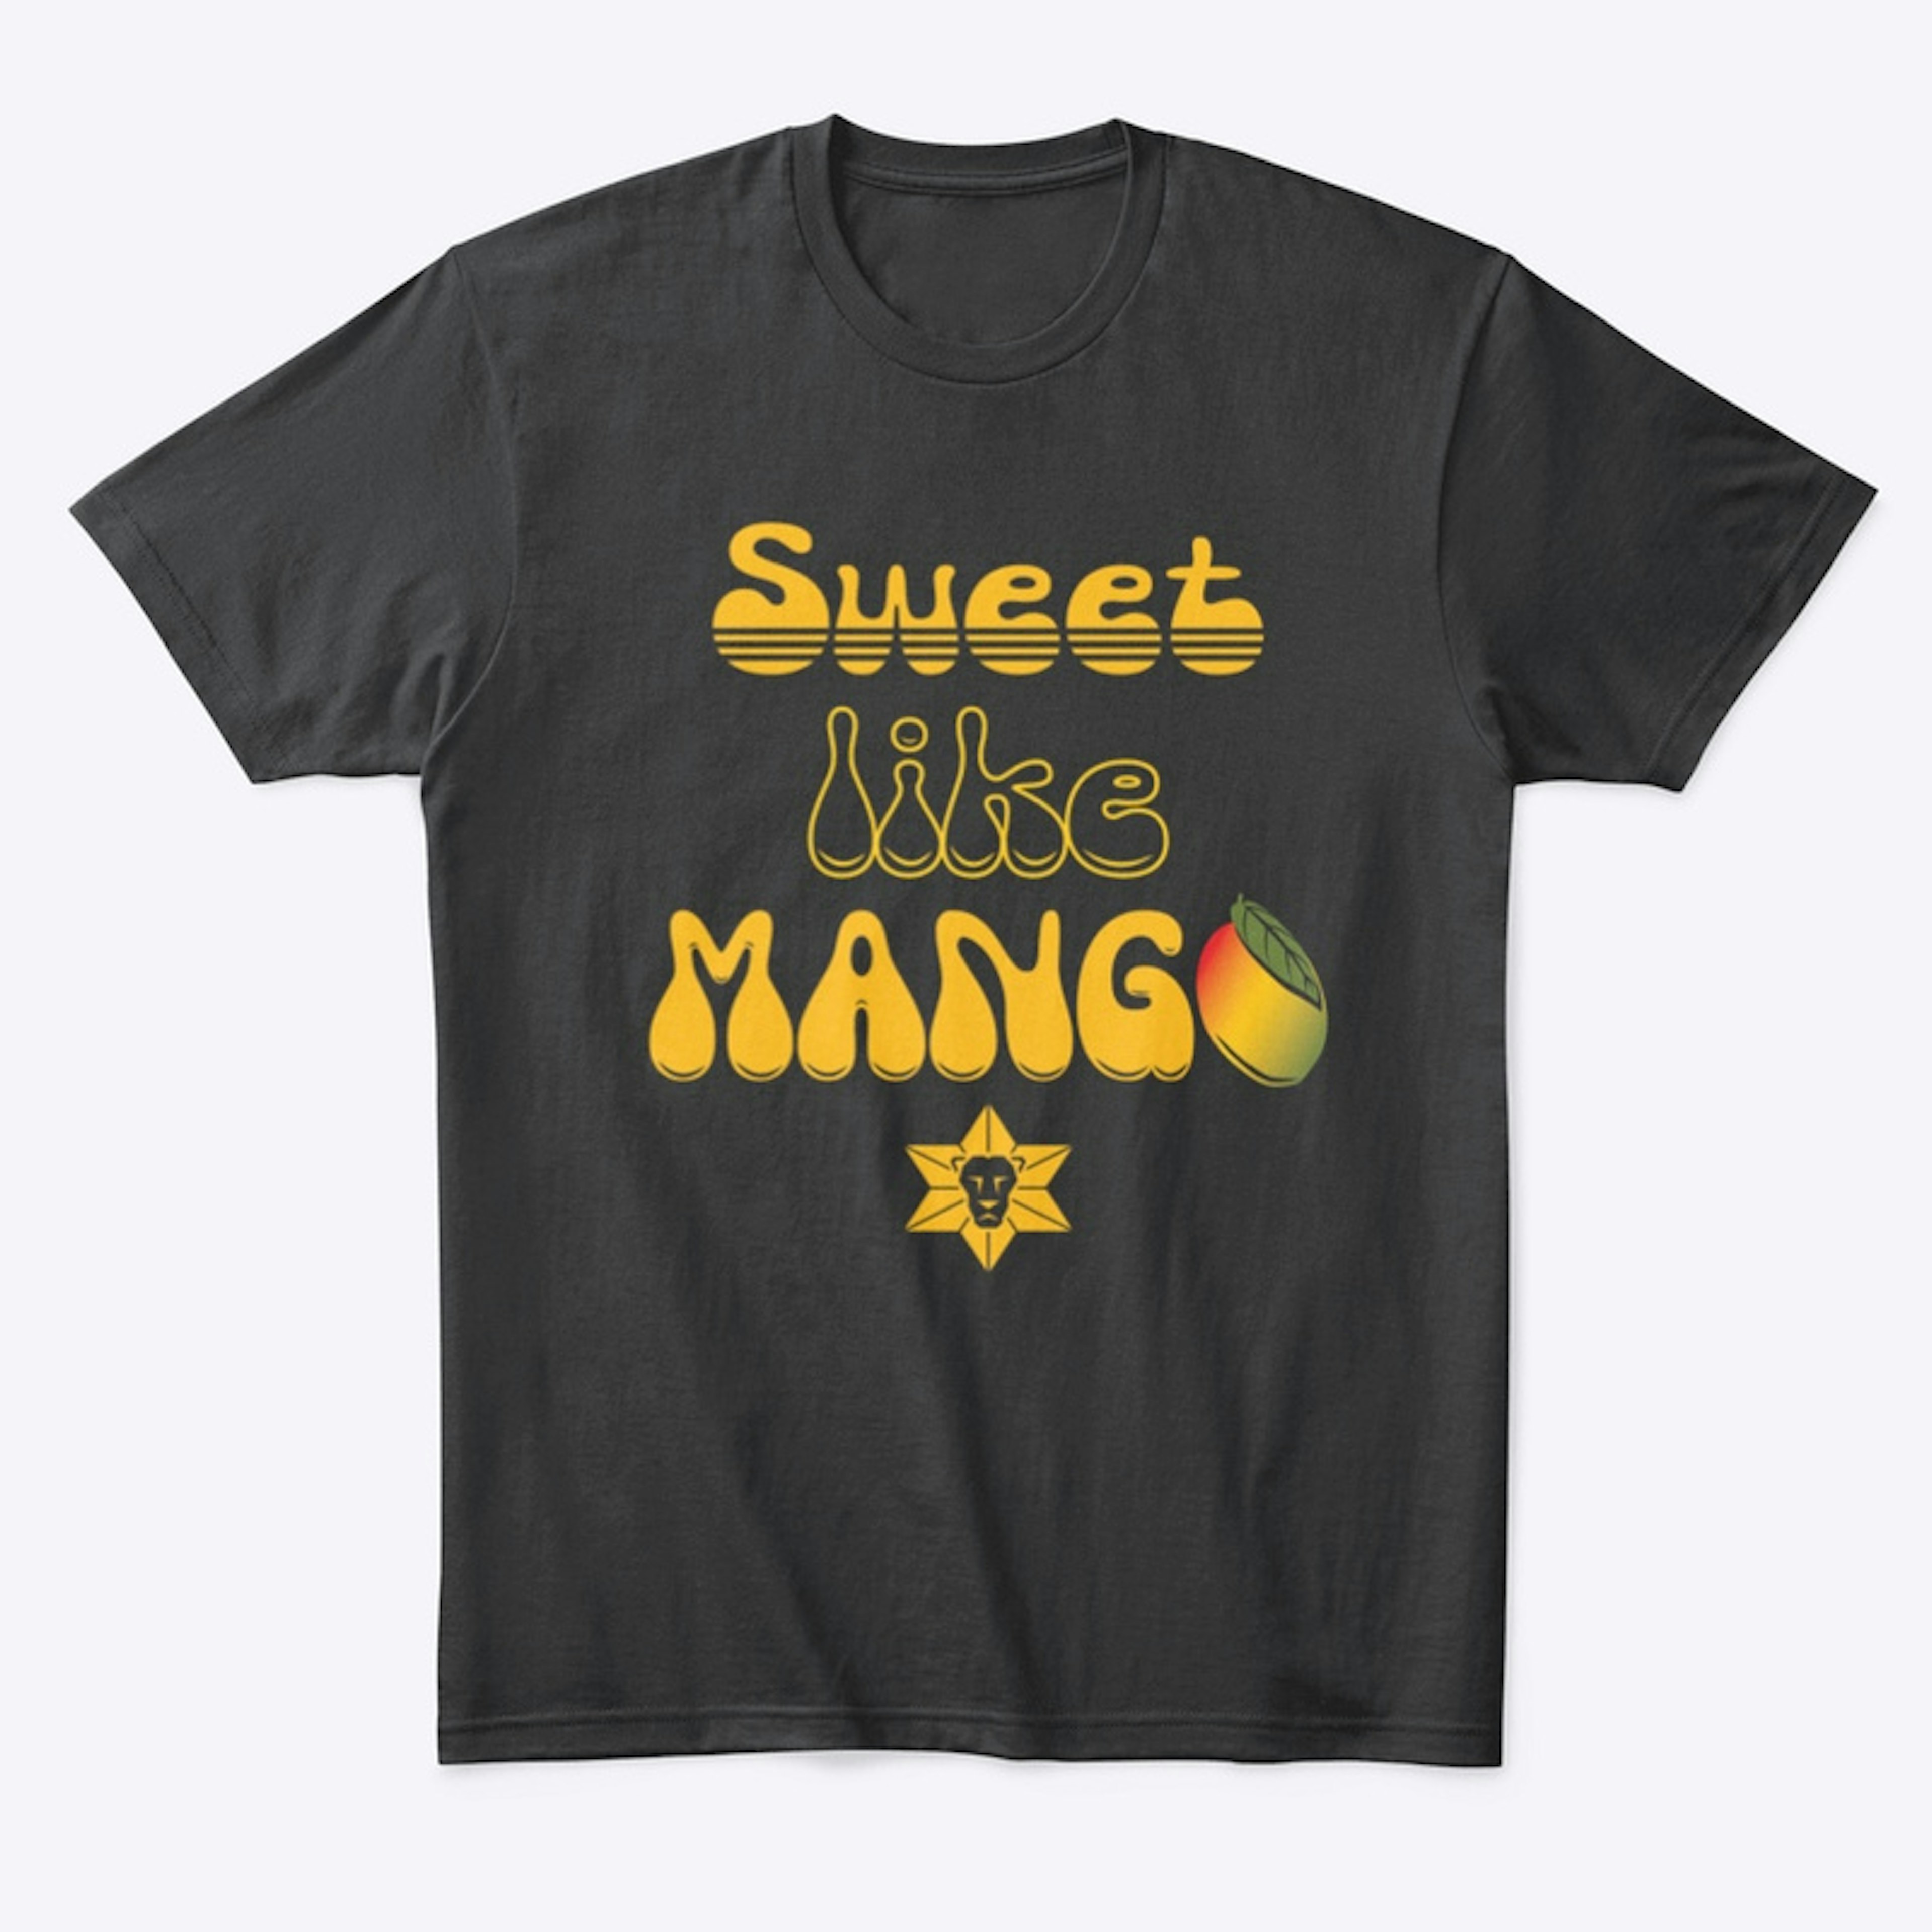 Sweet like Mango tee